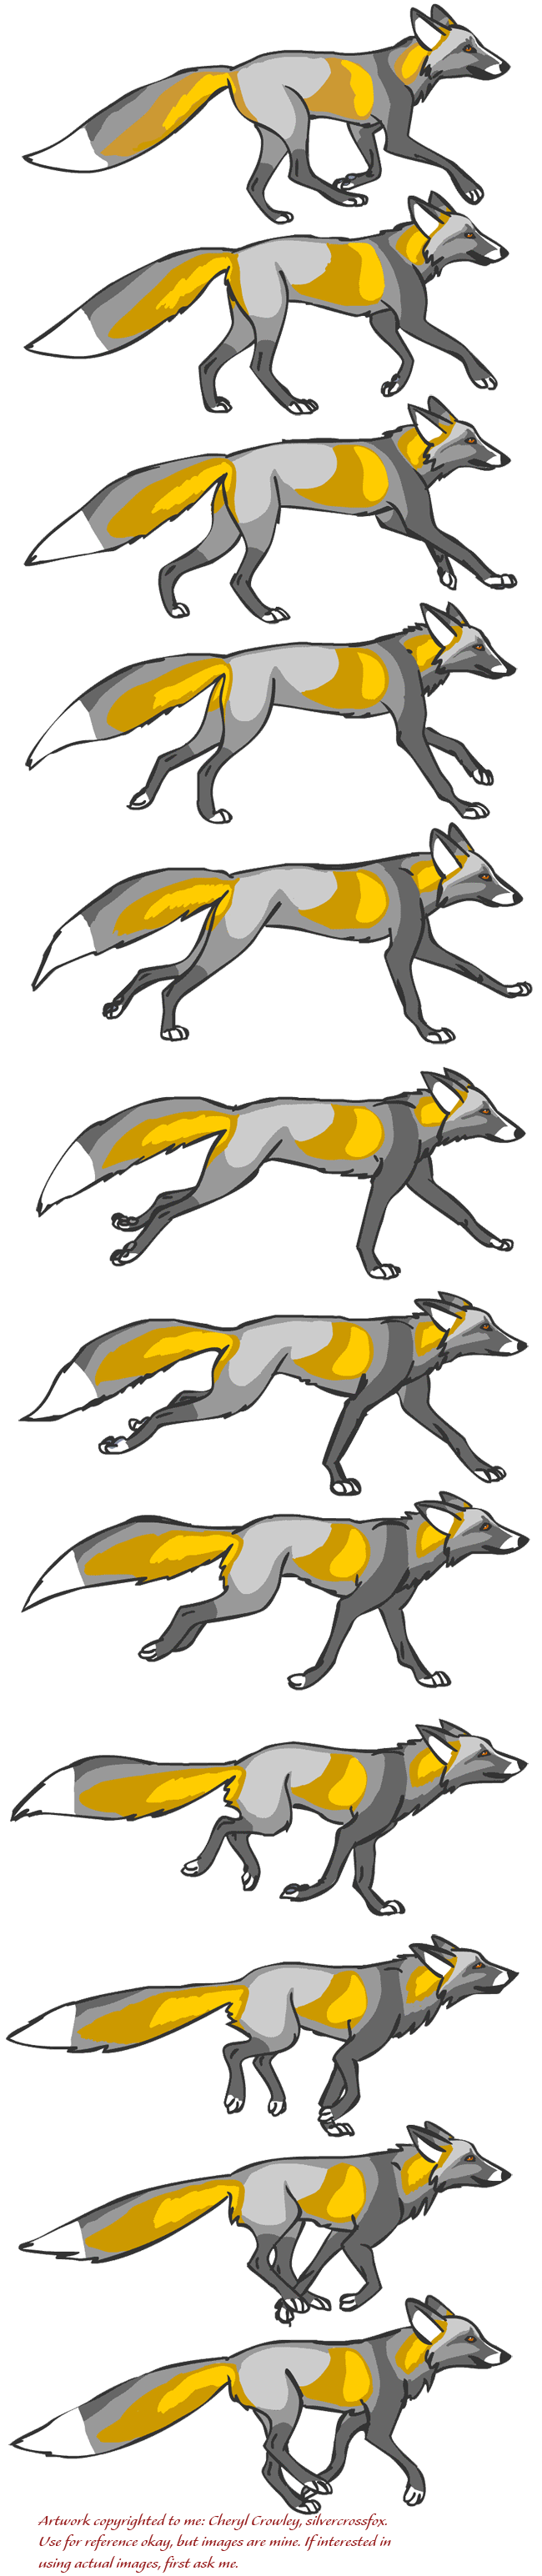 Fox Running Reference by silvercrossfox on DeviantArt